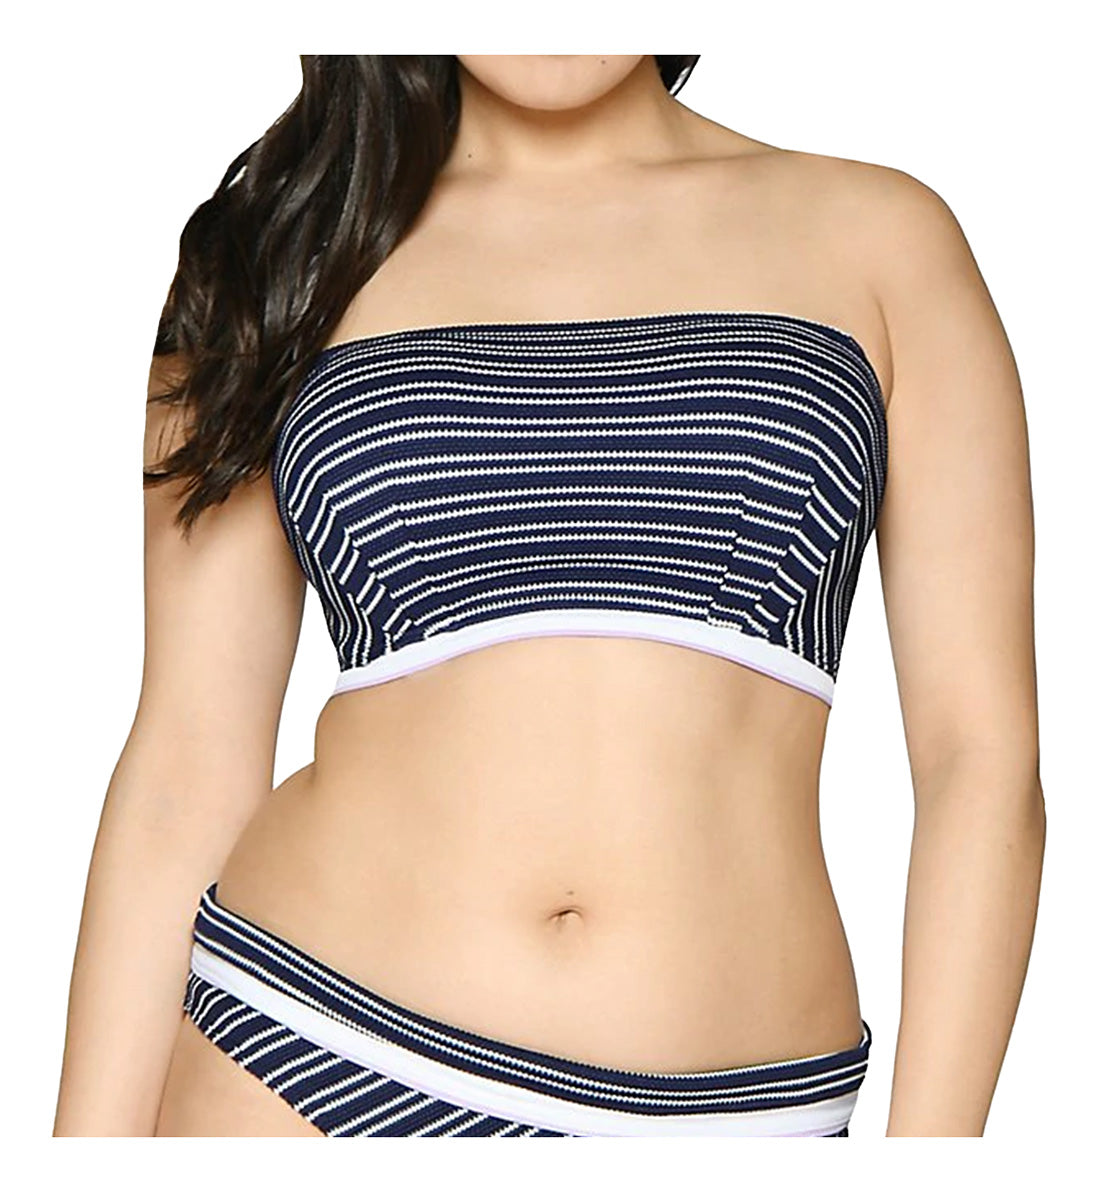 Curvy Kate Sailor Girl Bandeau Underwire Bikini Top (CS003307),28FF,Navy Stripe - Navy Stripe,28FF